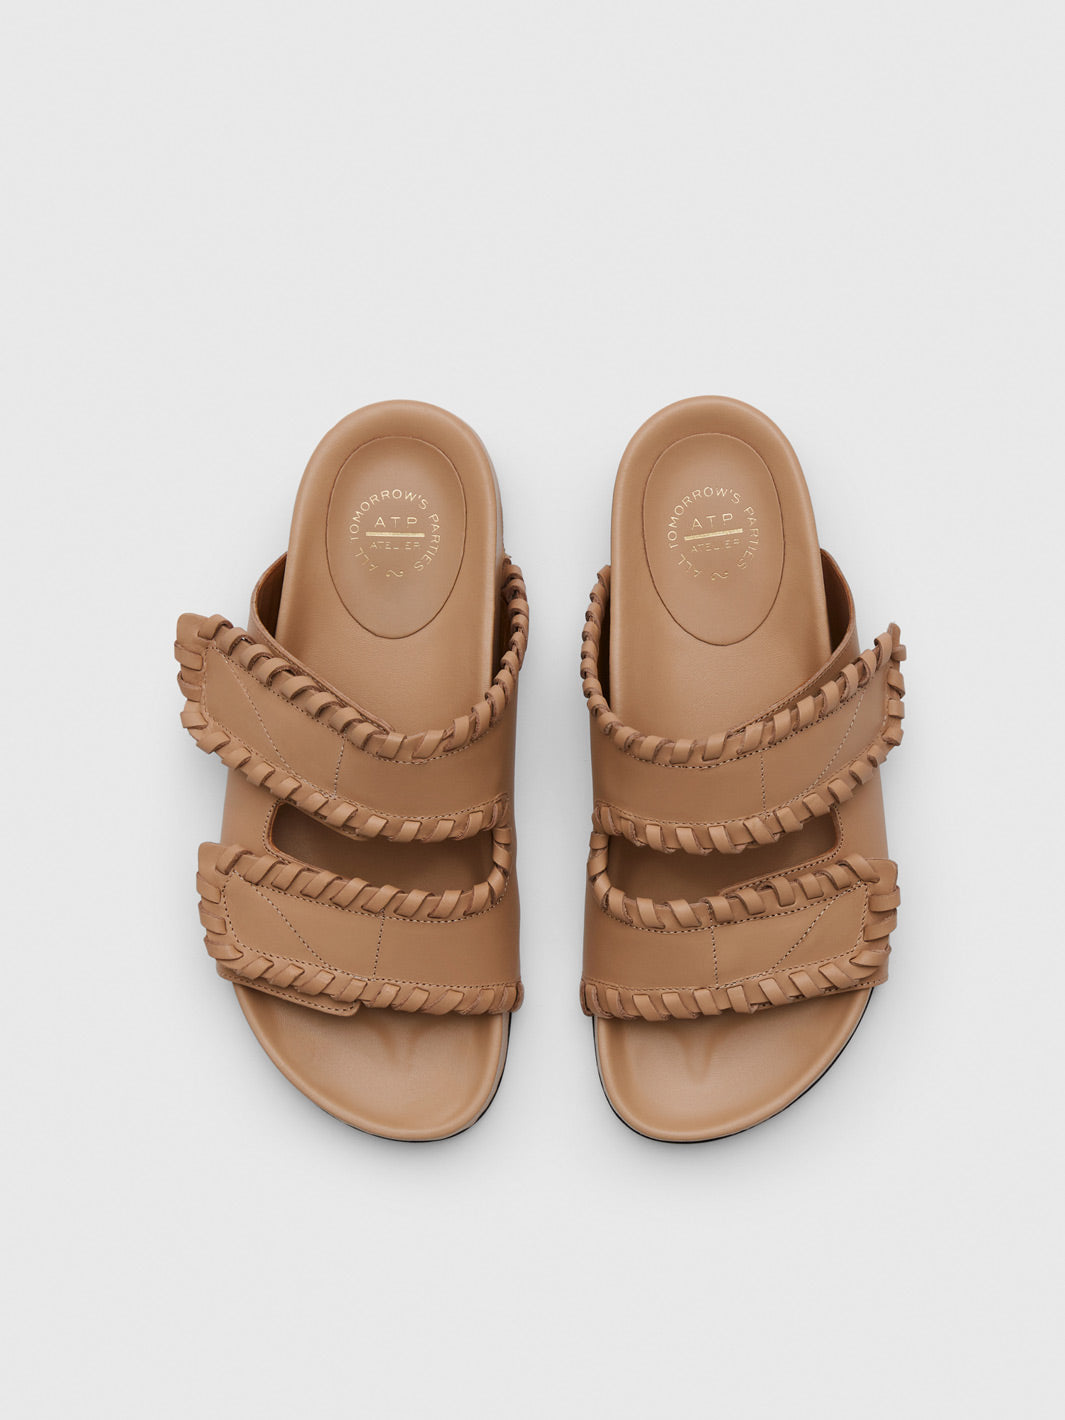 Furlo Stitch Nocciola Leather Comfy sandals